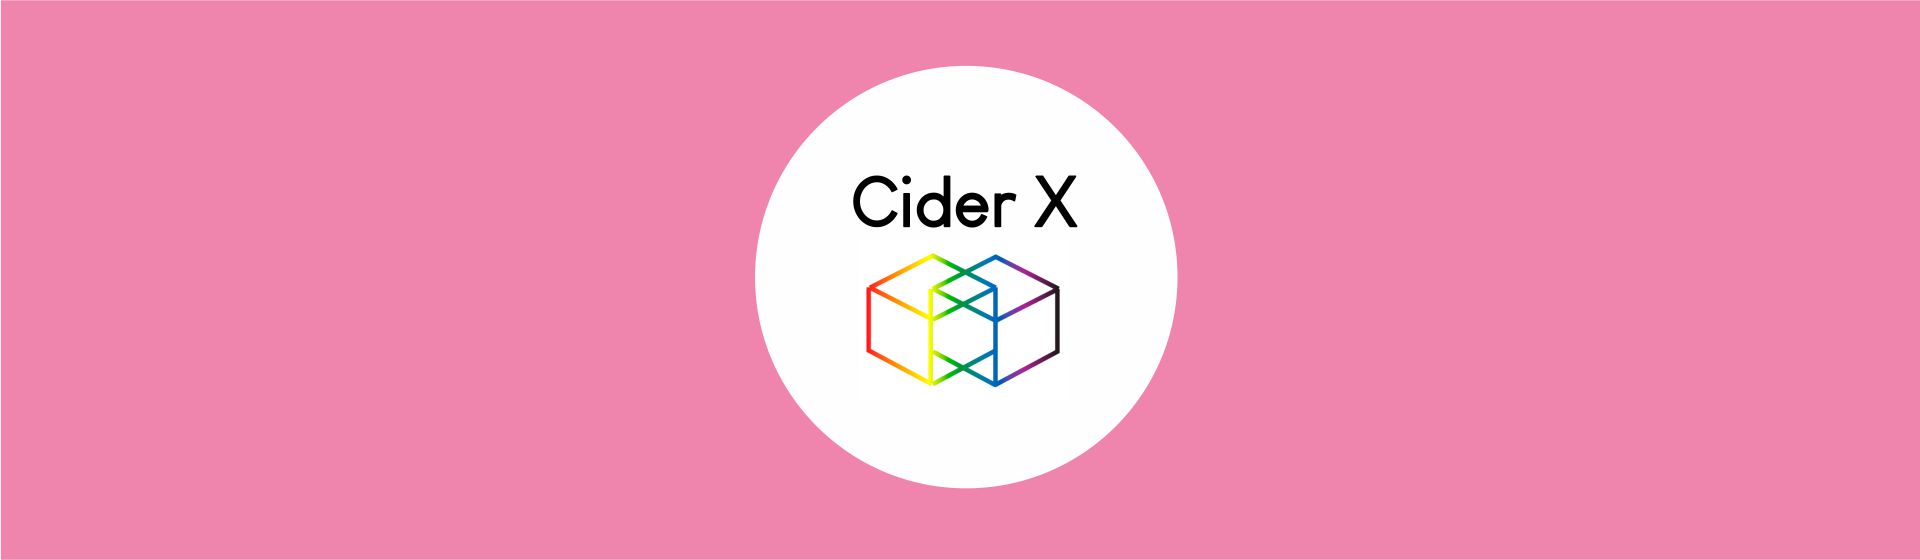 CiderX, el nuevo grupo de afinidad LGTBQ - Cider | Uniandes